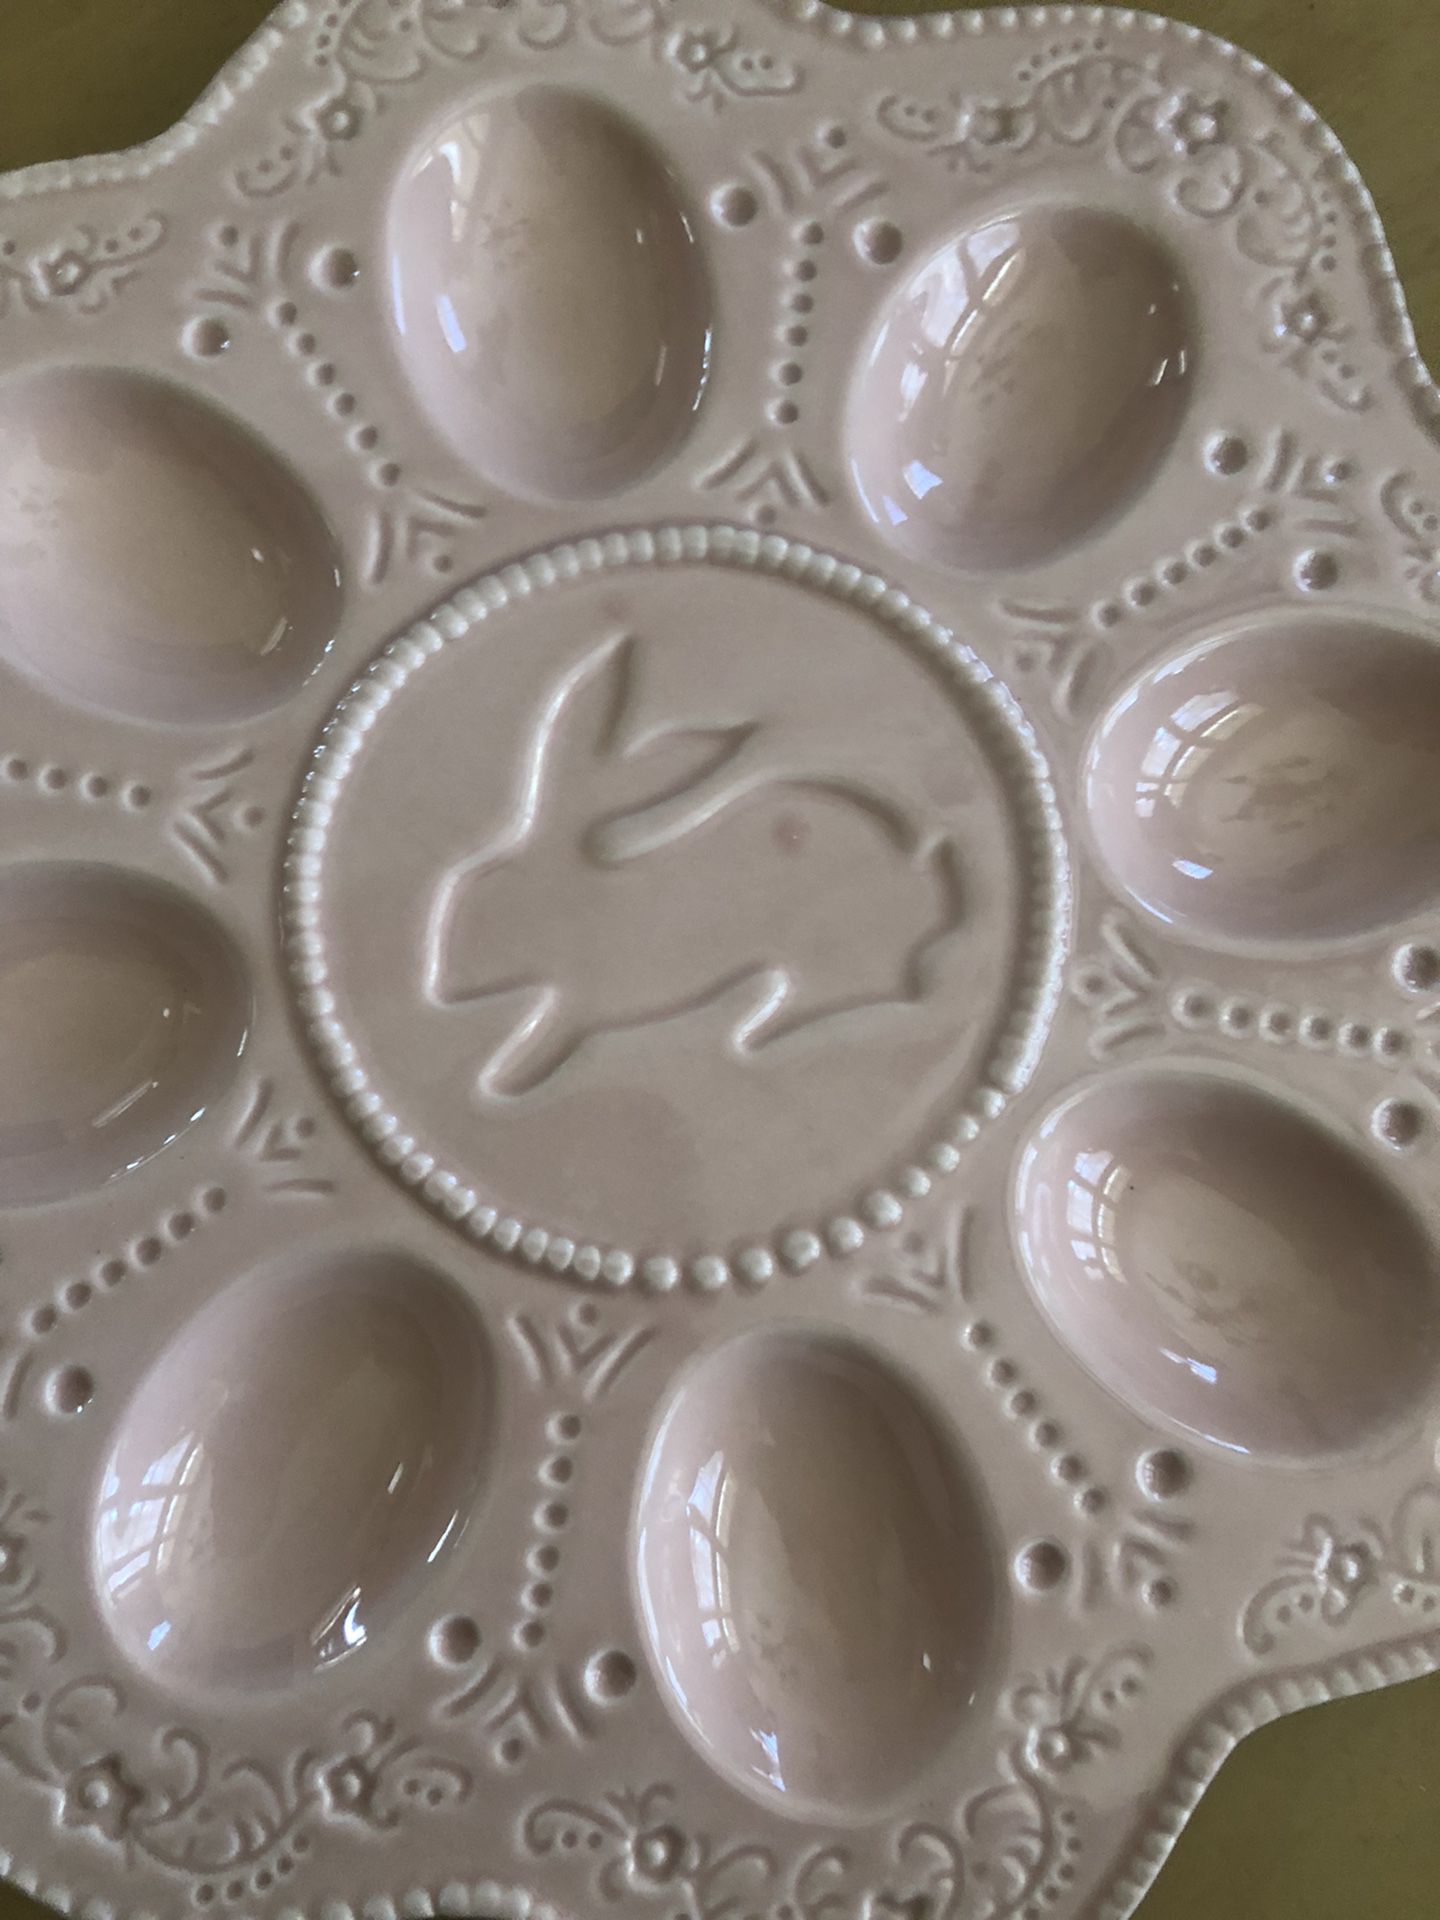 Easter egg dishes